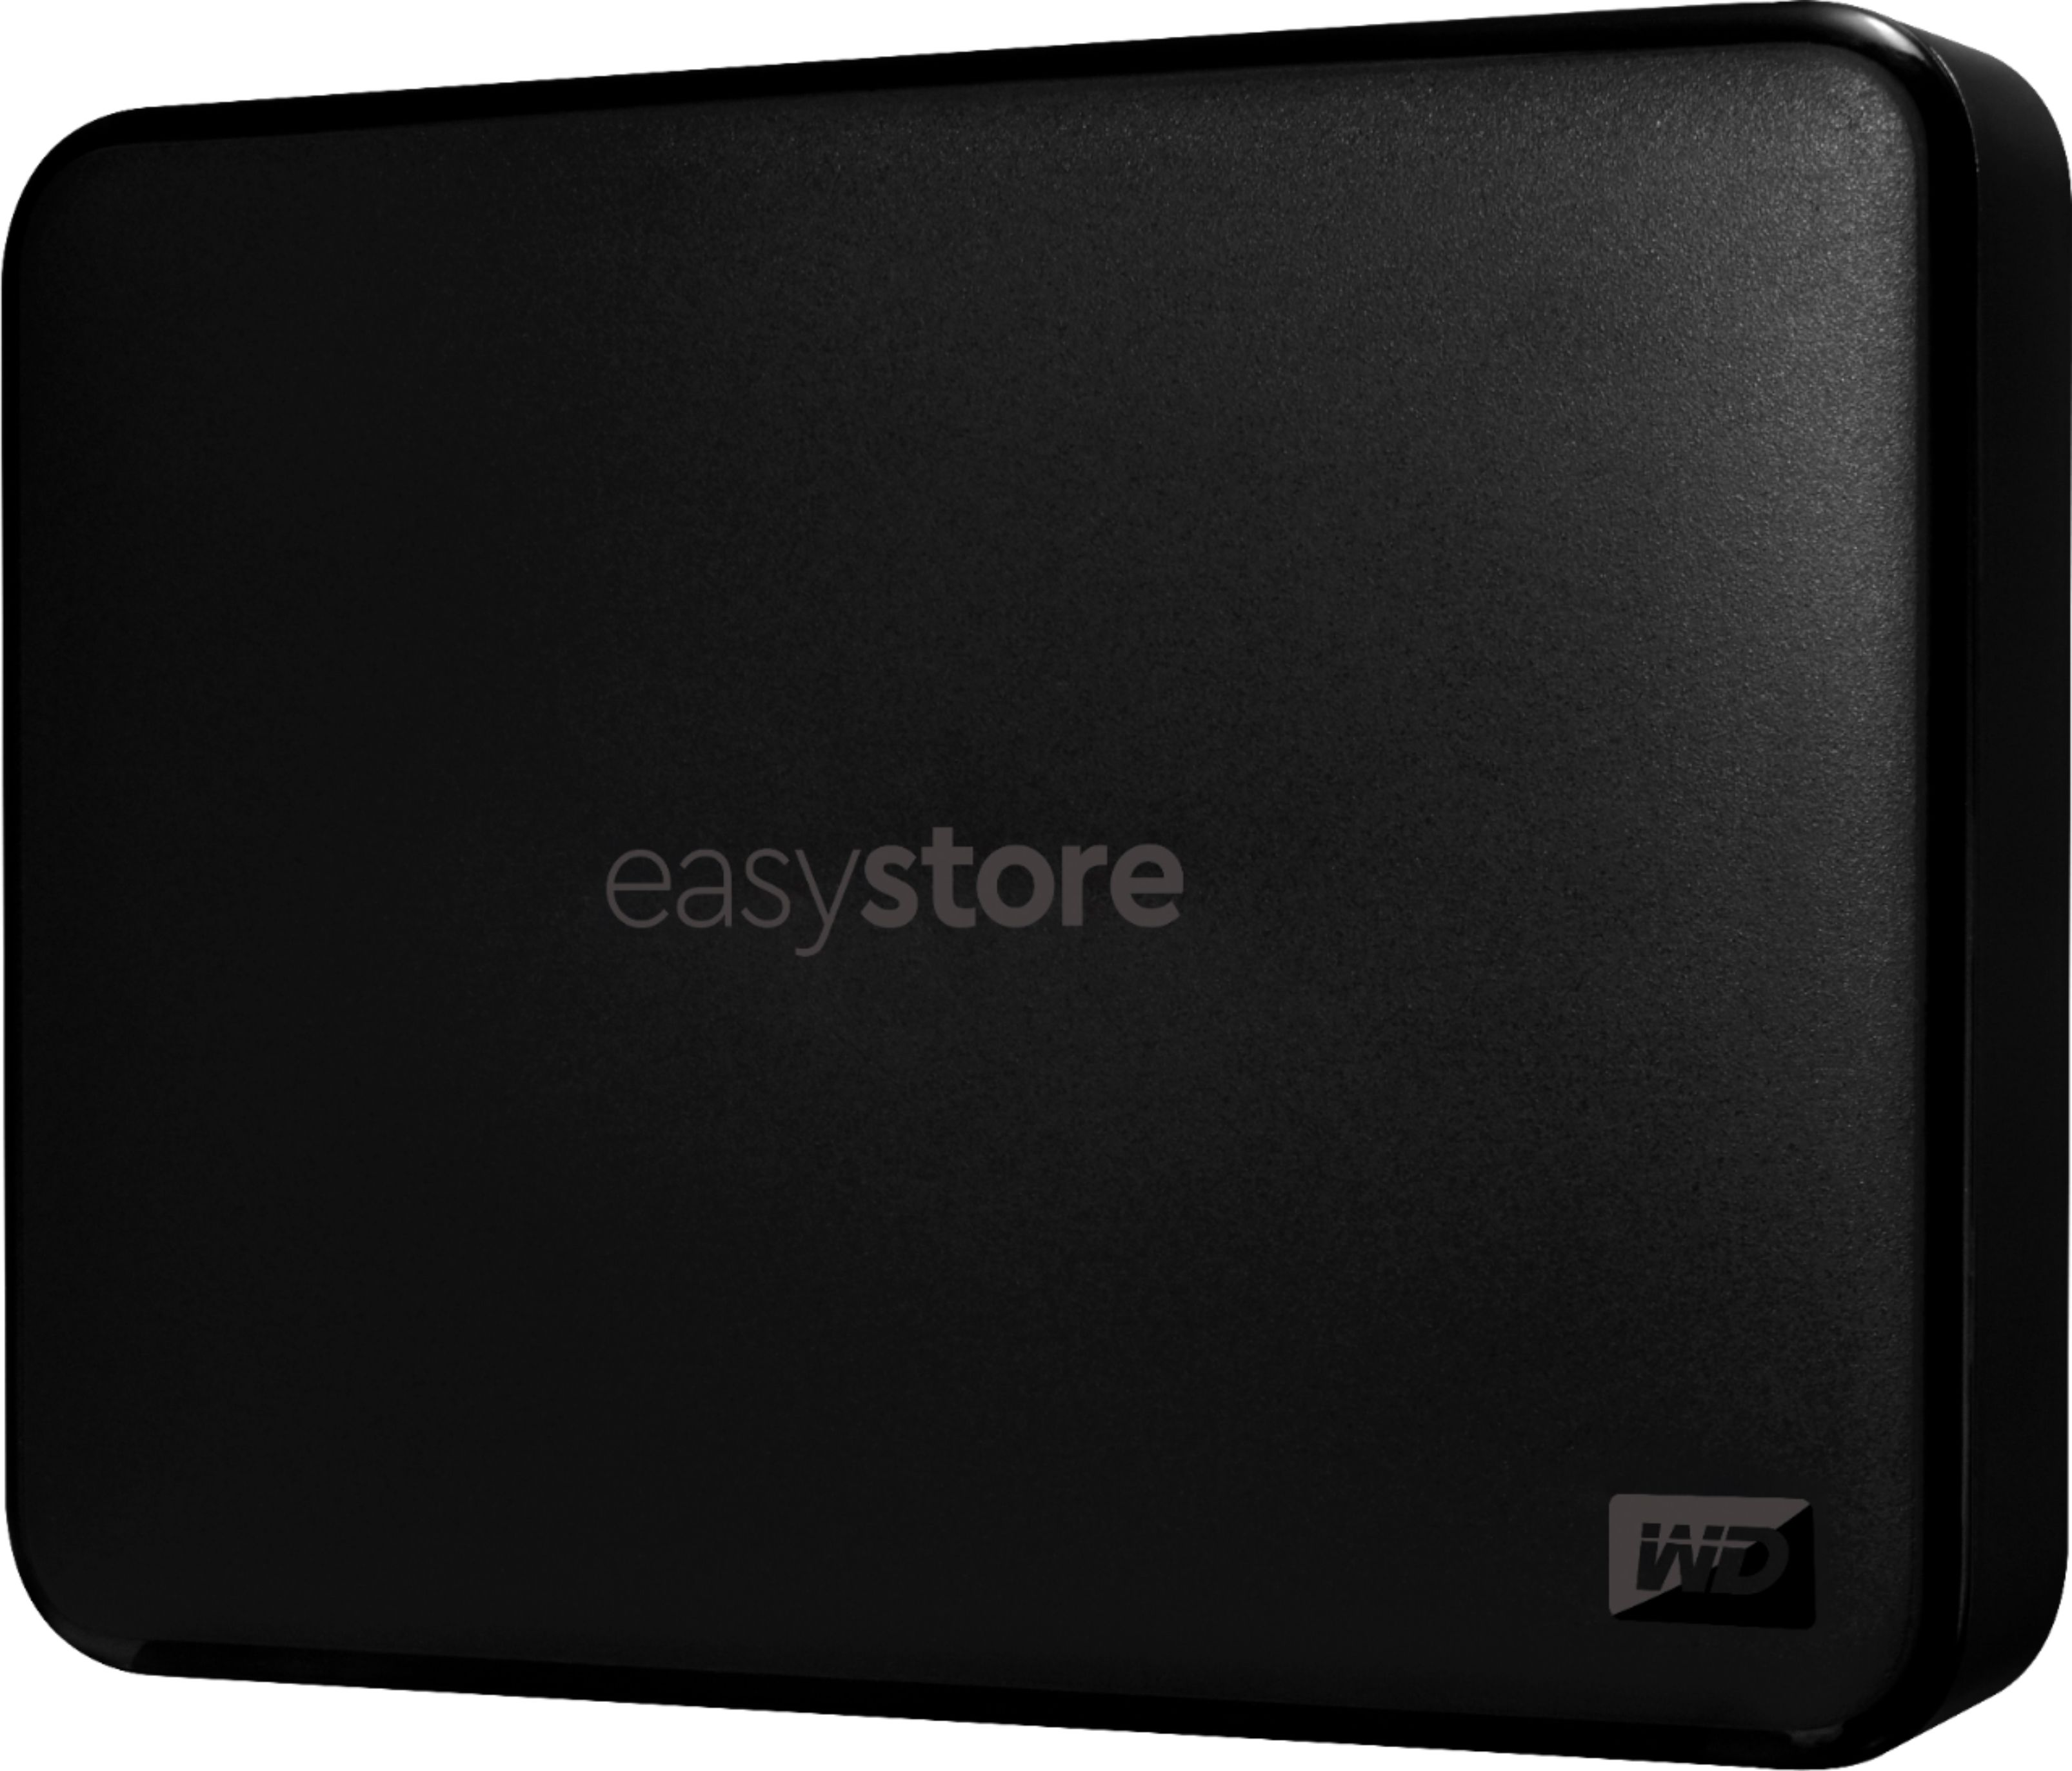 WD Easystore 5TB External USB 3.0 Portable Hard Drive Black WDBAJP0050BBK-WESN - Best Buy $99.99